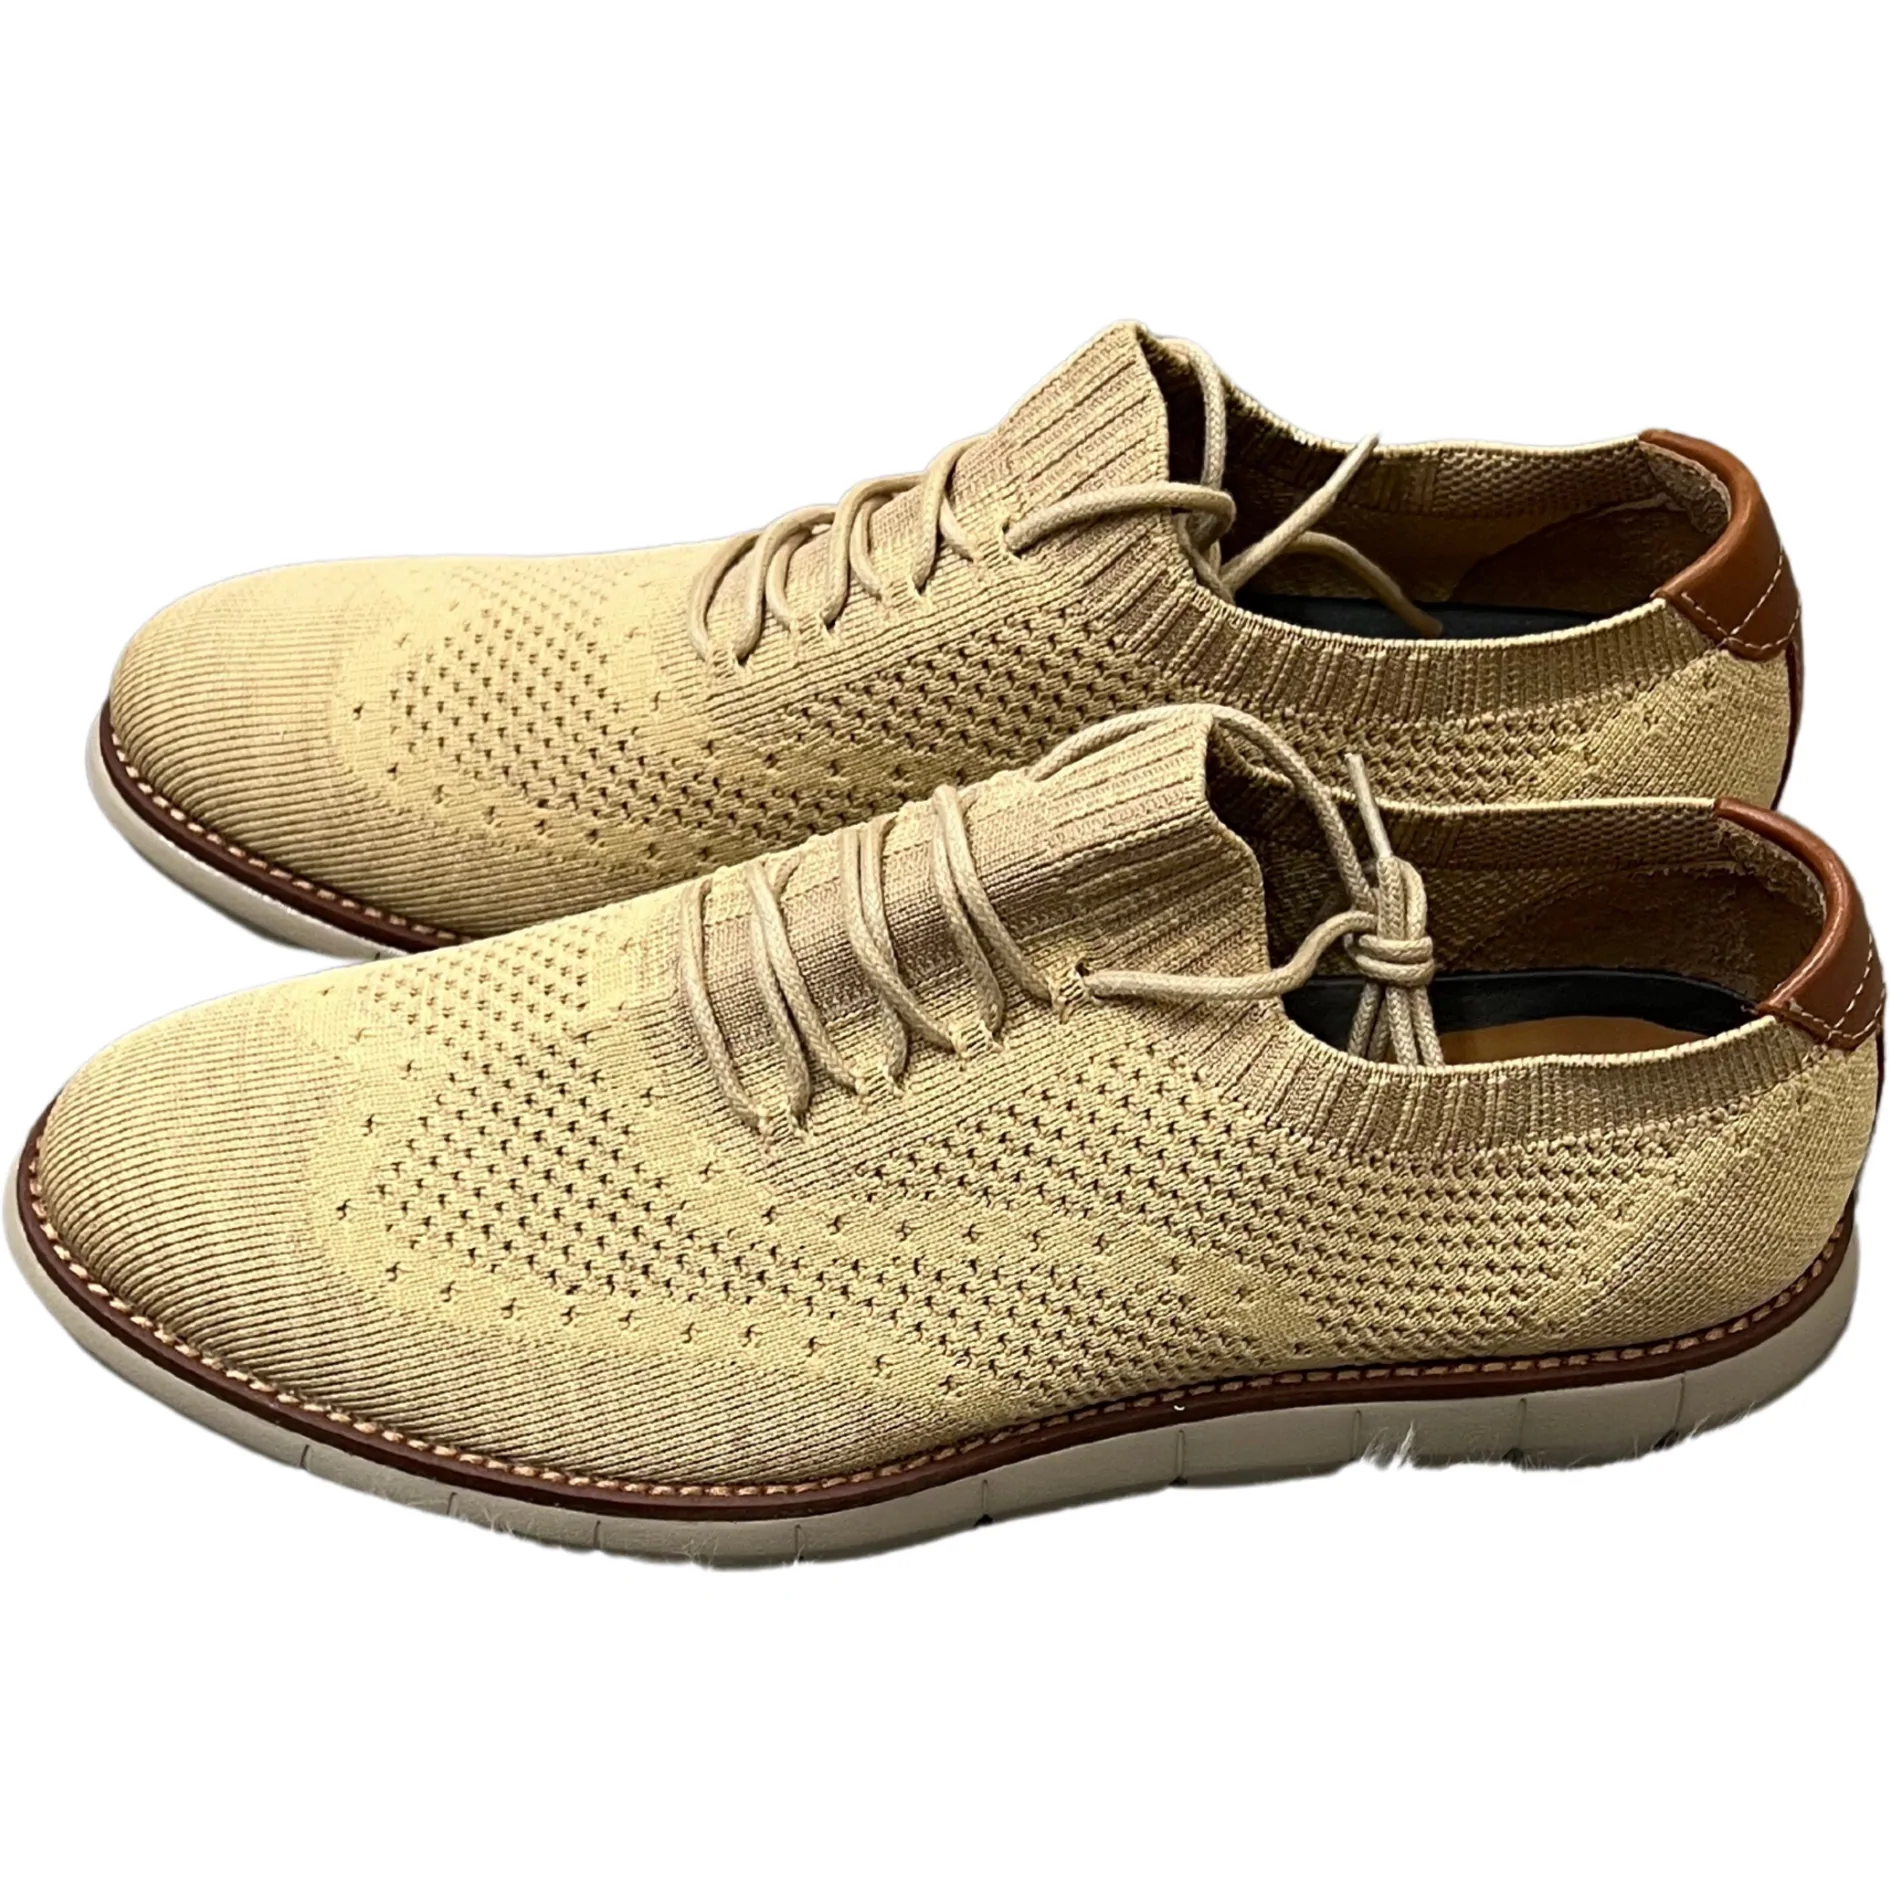 Johnston & Murphy / Knit Wingtip Shoes / Holden / Beige / Various Sizes